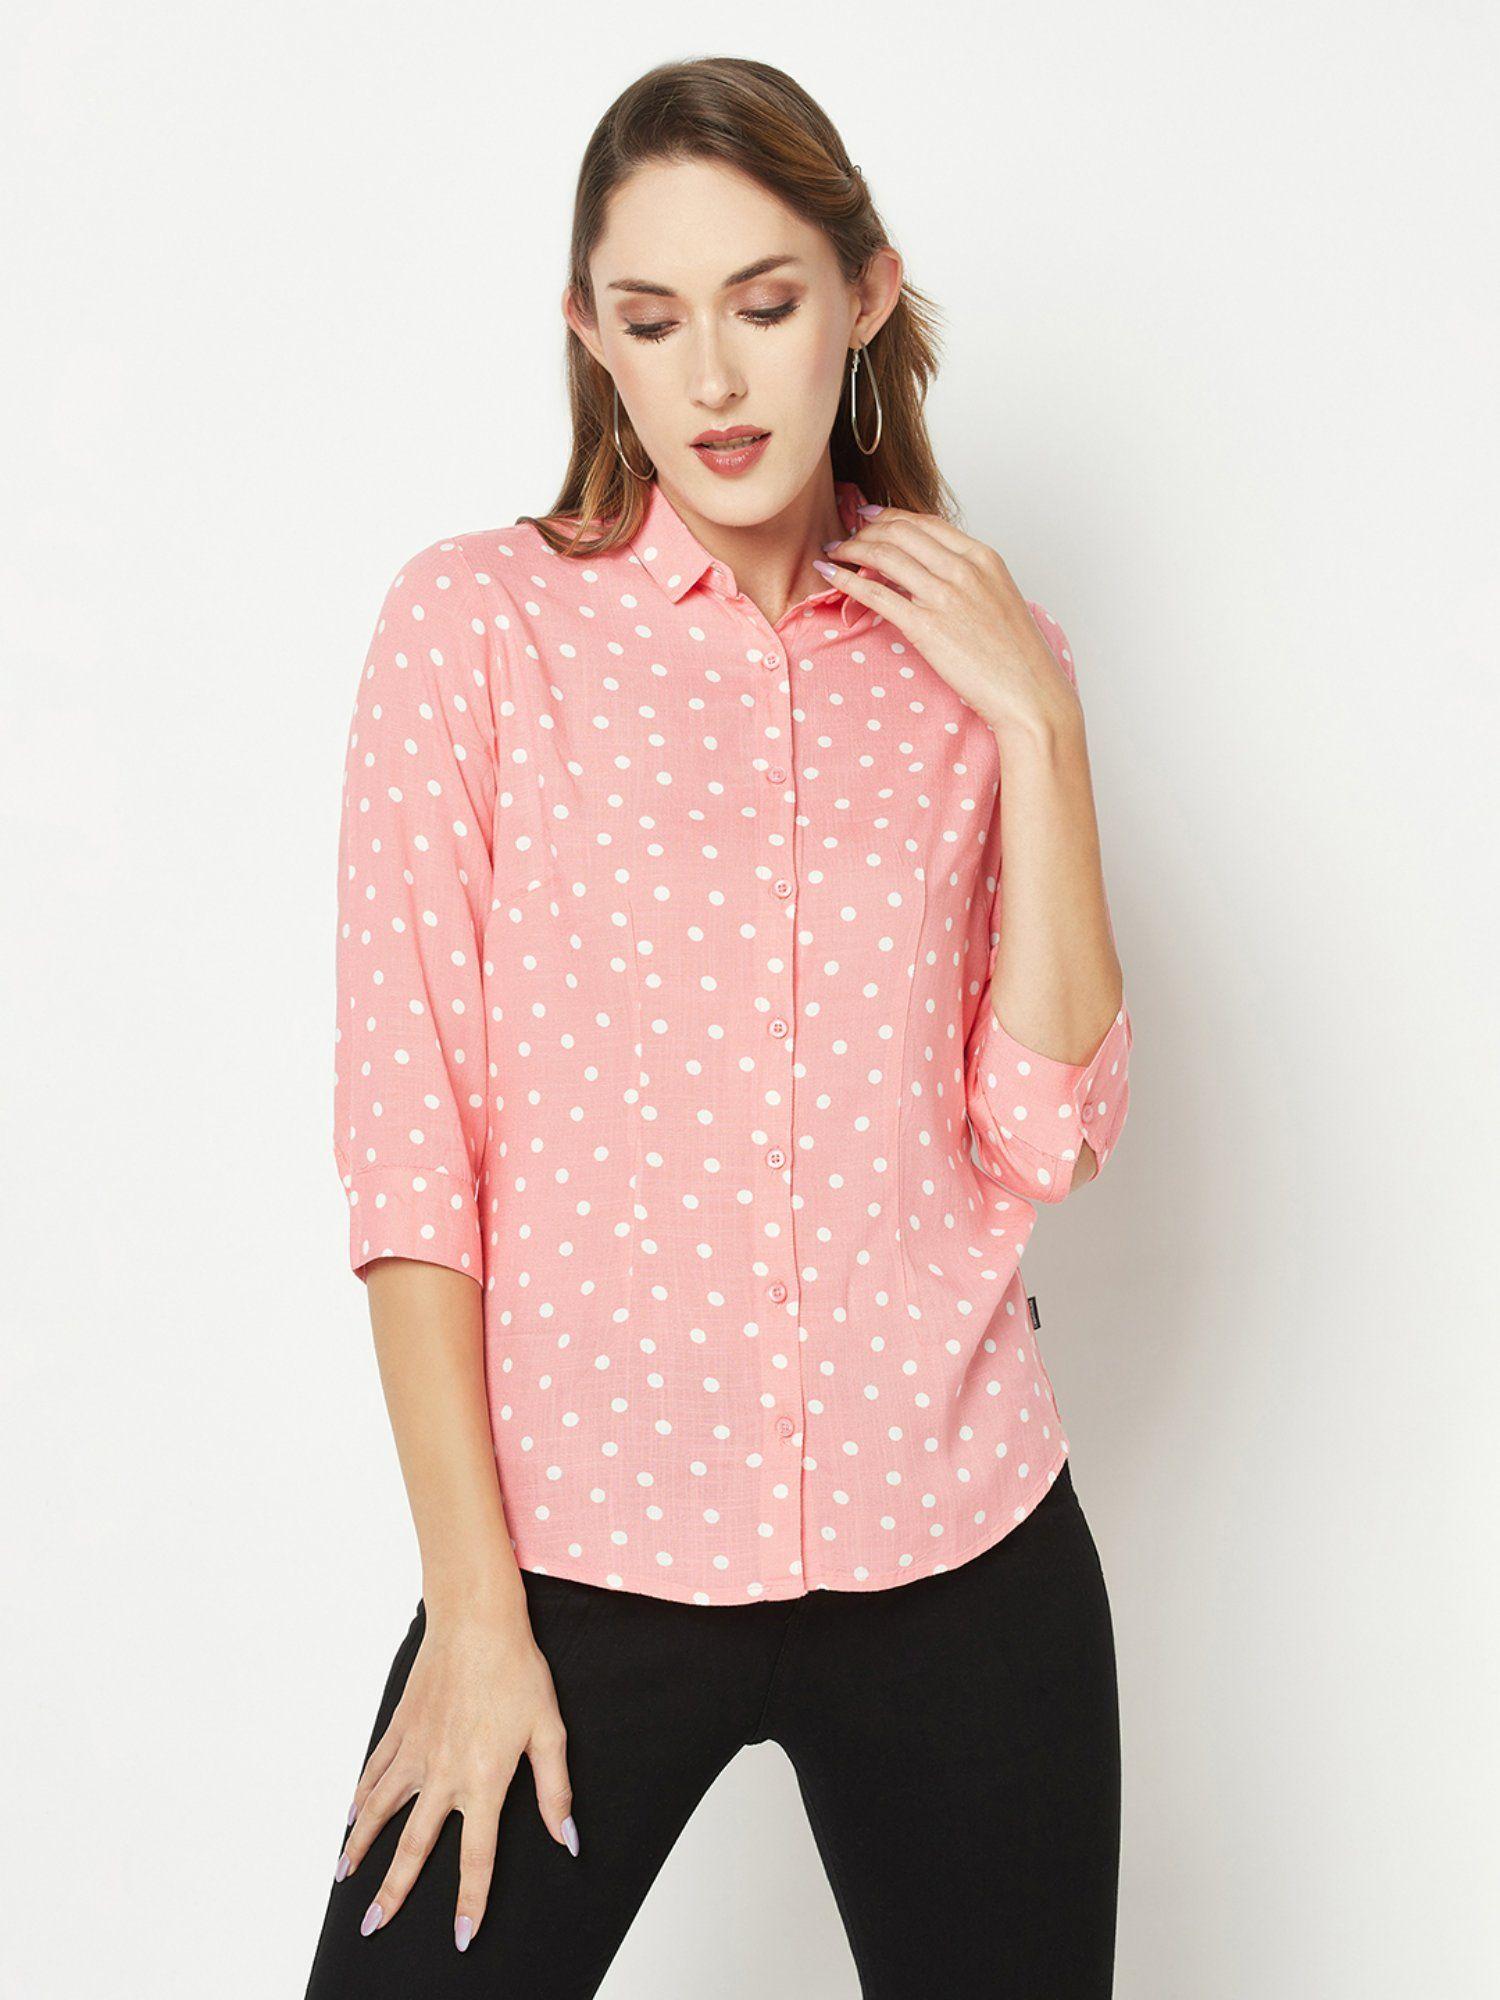 women-pink-polka-dotted-shirt